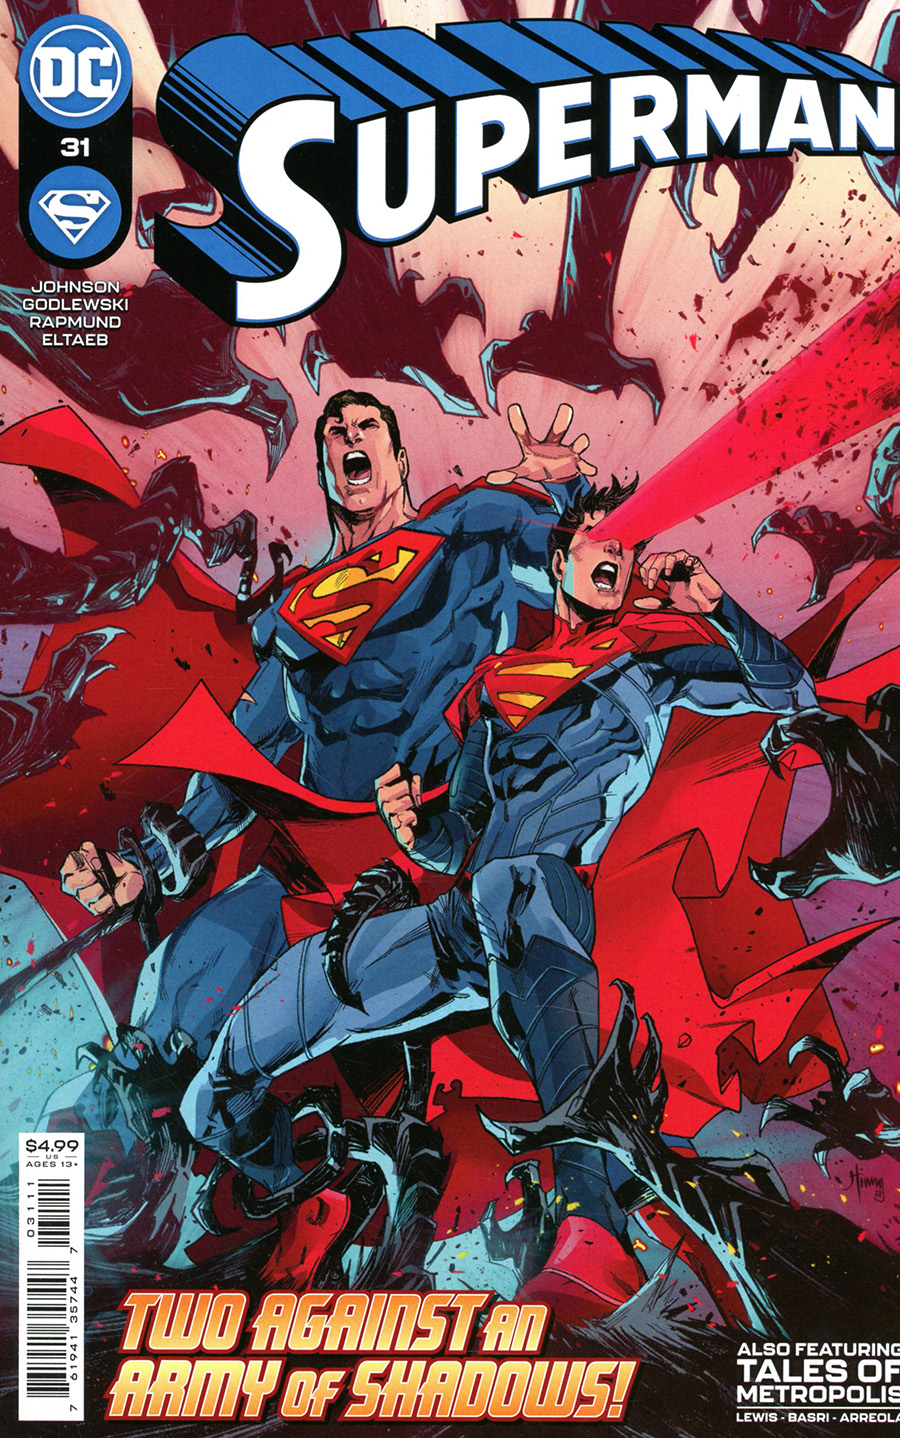 Superman Vol 6 #31 Cover A Regular John Timms Cover